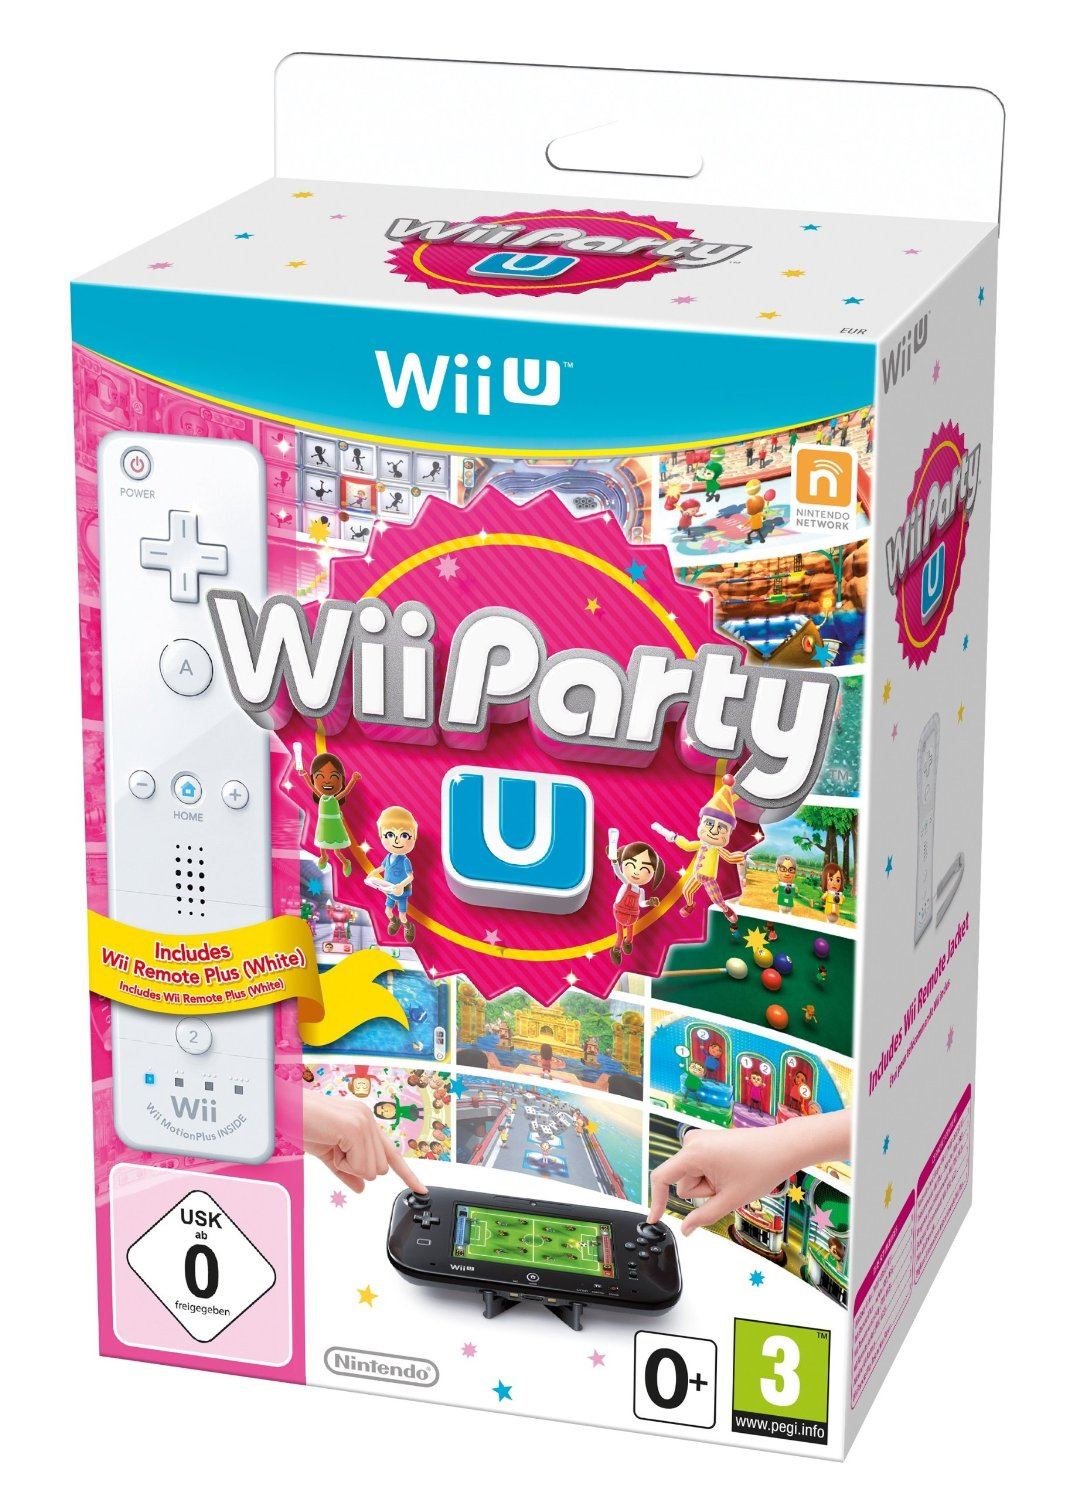 Wii Party U, Nintendo